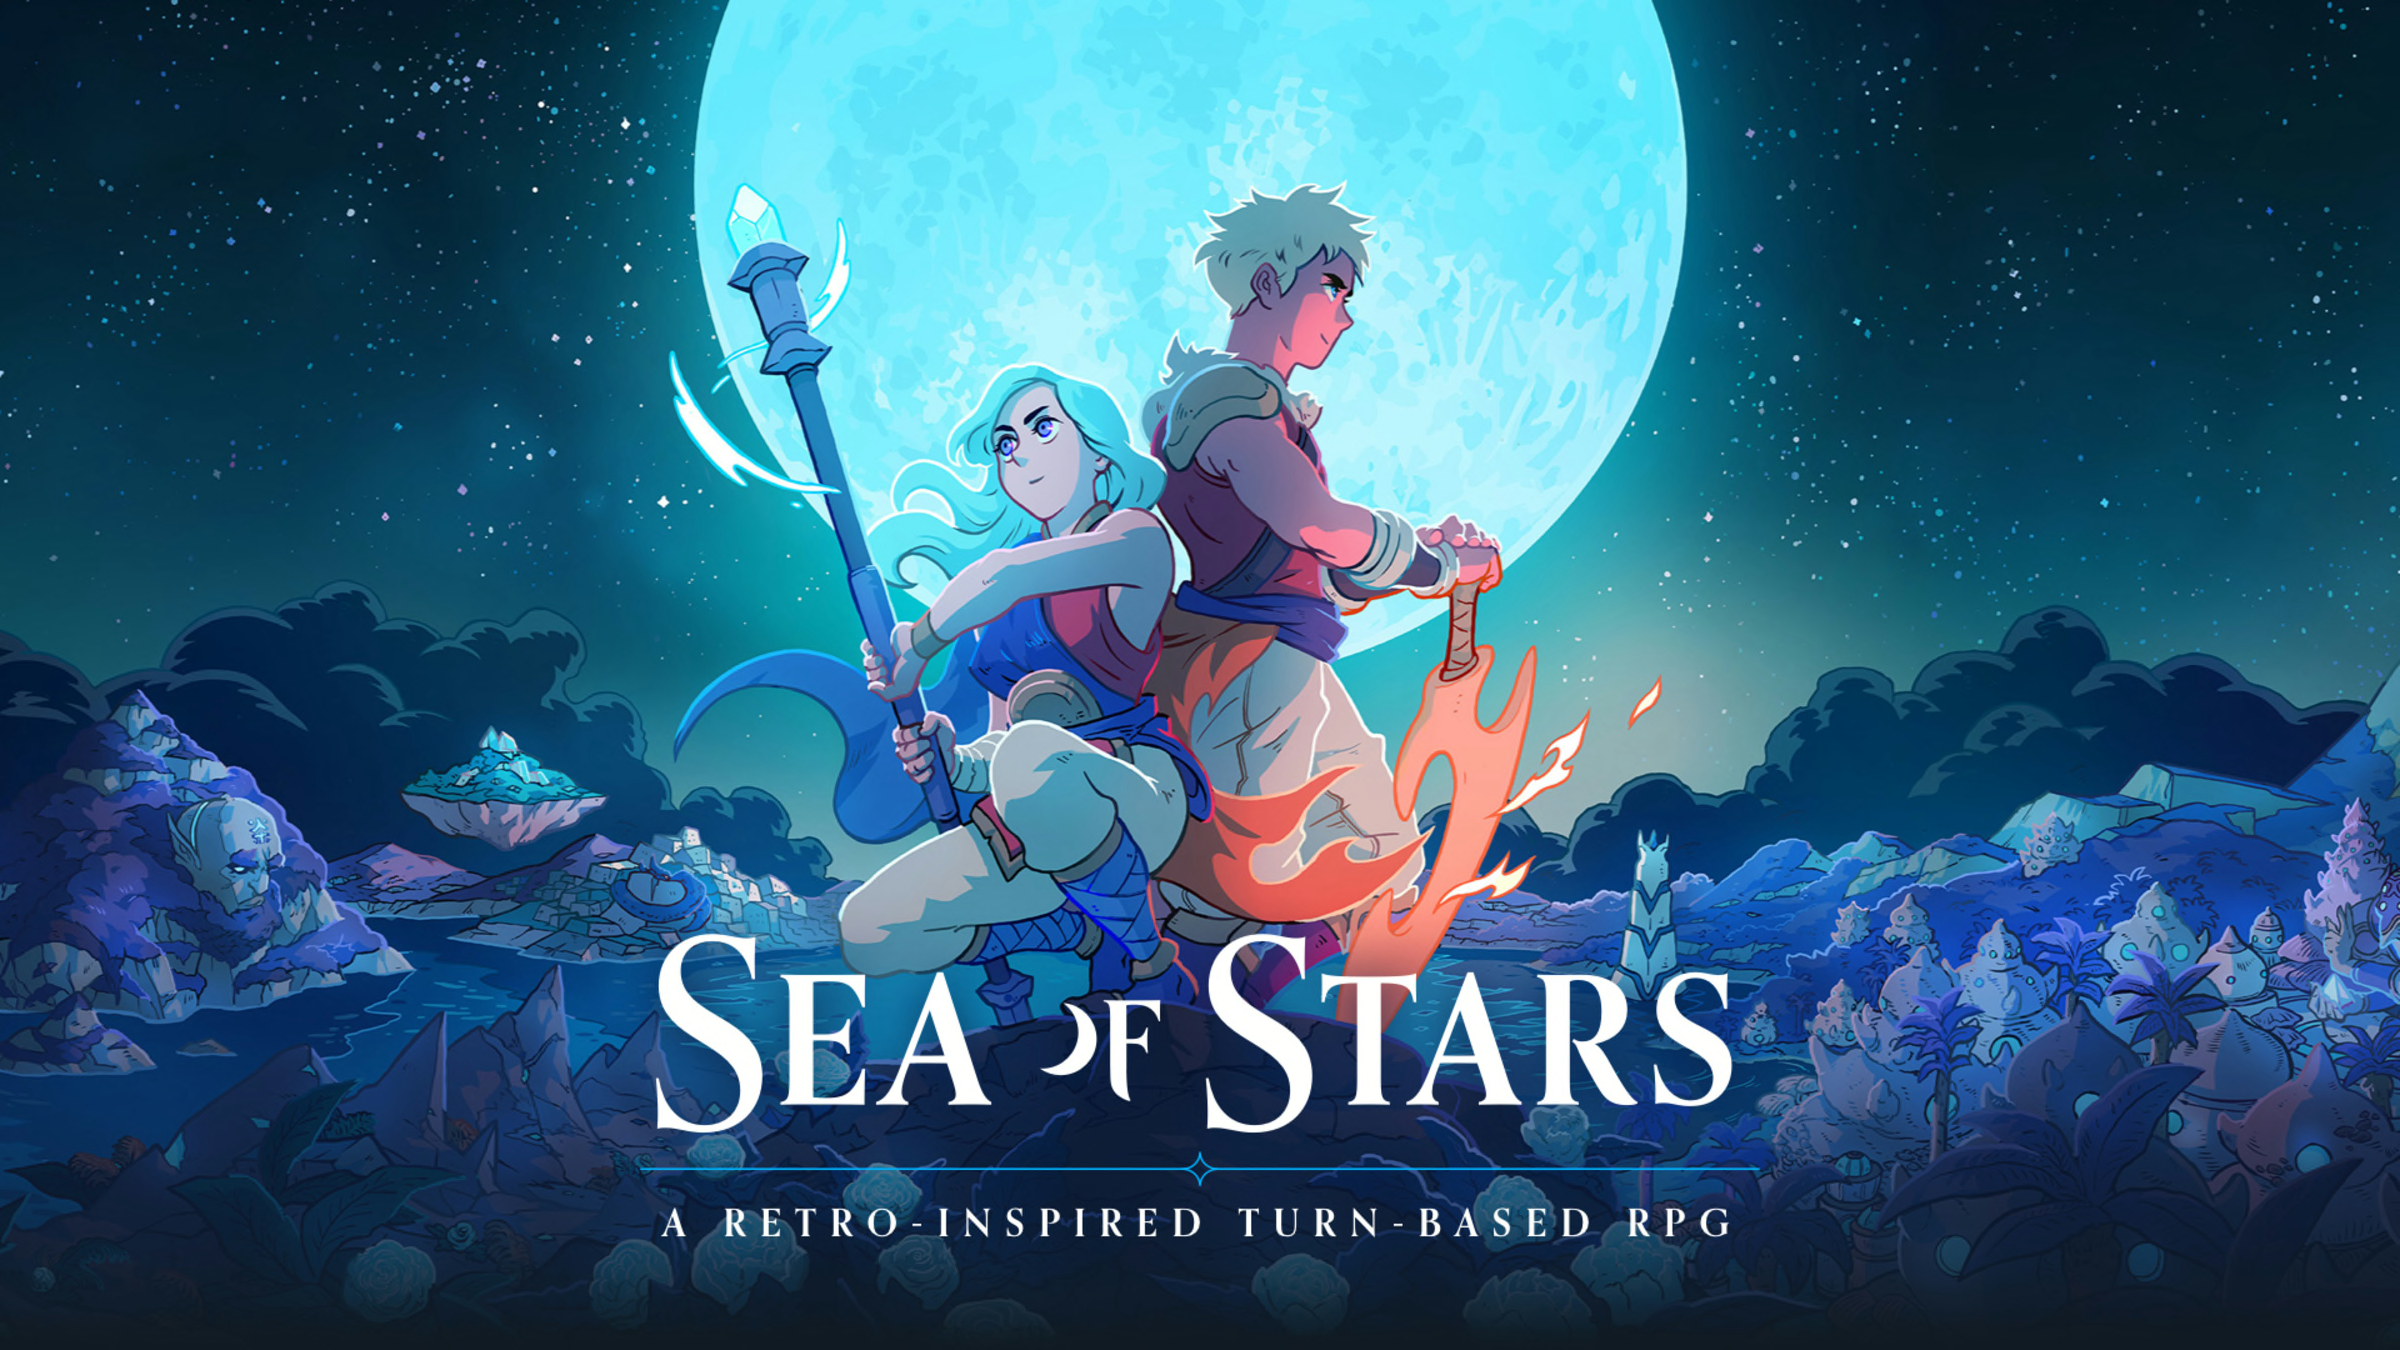 Le RPG Sea of Stars sortira à l'été 2023.